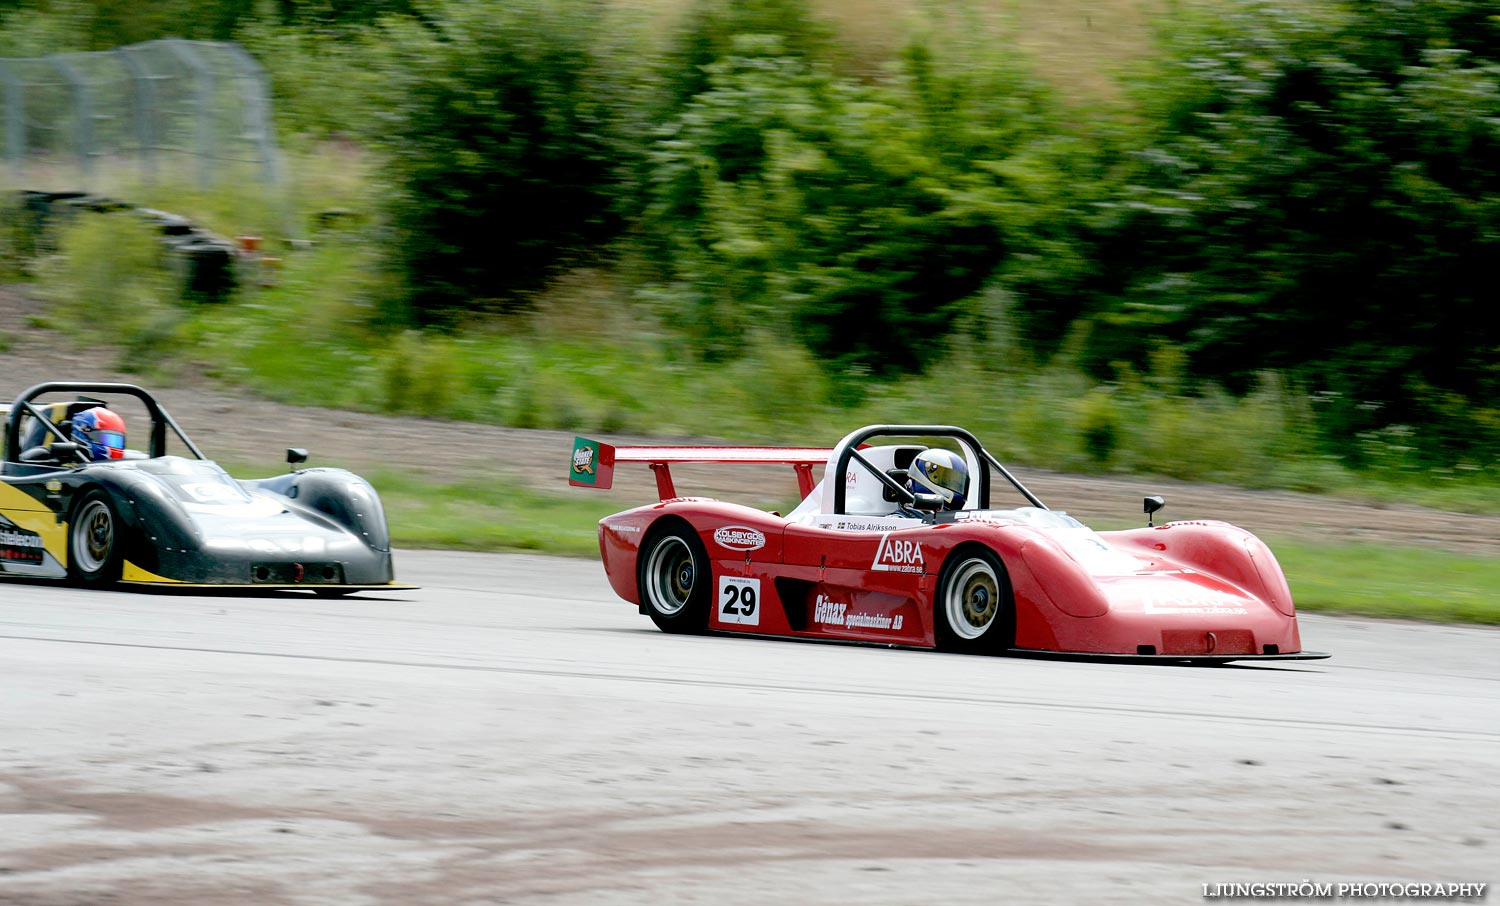 SSK Raceweek,mix,Kinnekulle Ring,Götene,Sverige,Motorsport,,2009,107585